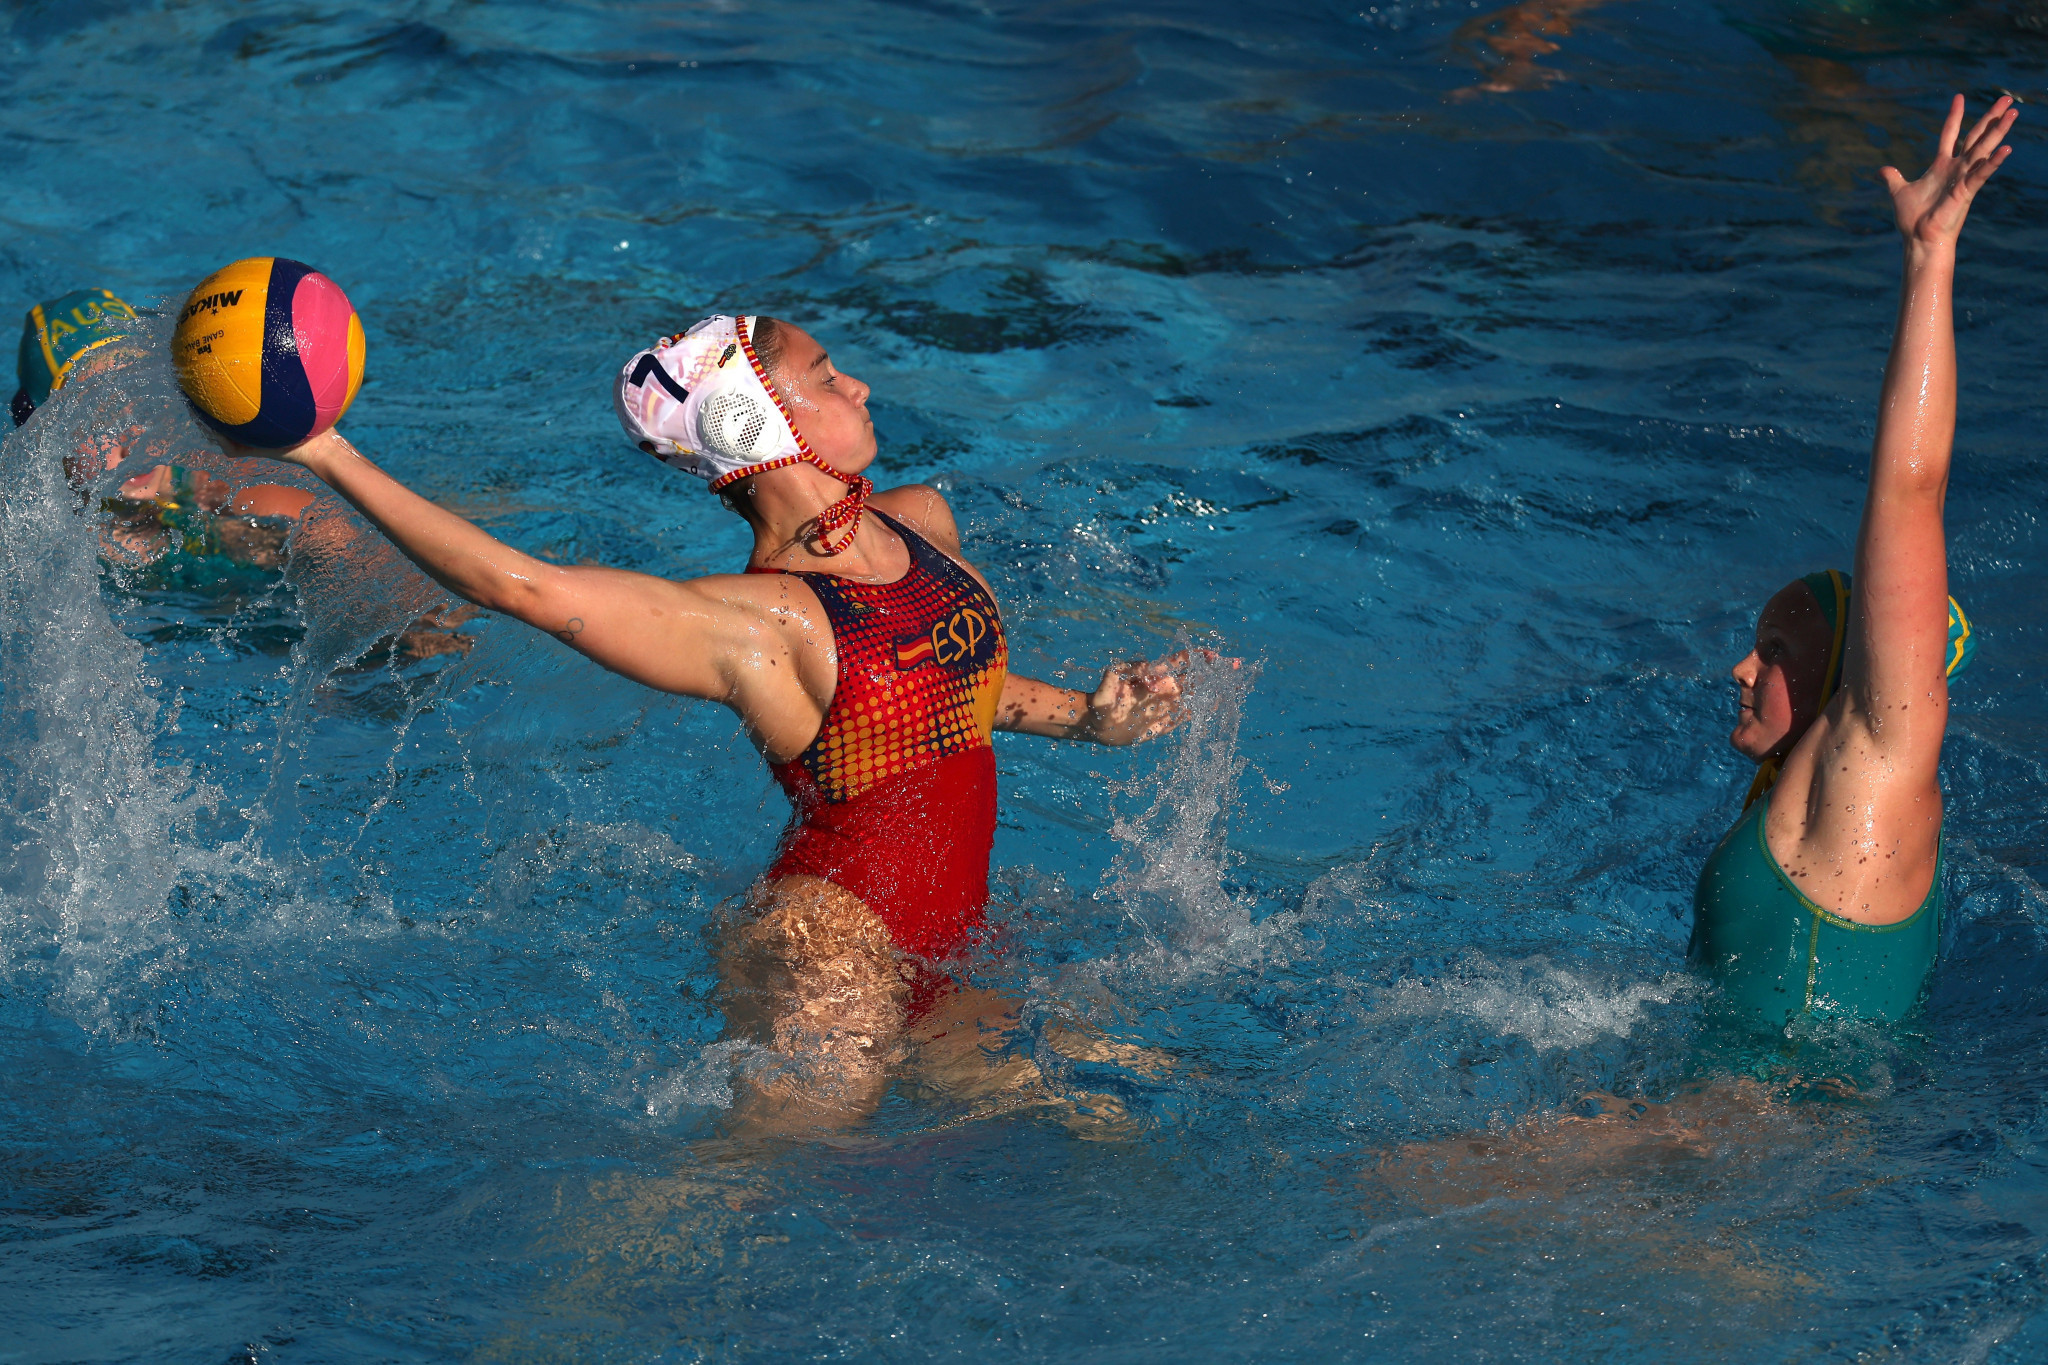 Tenerife to host FINA Women's Water Polo World League Super Final